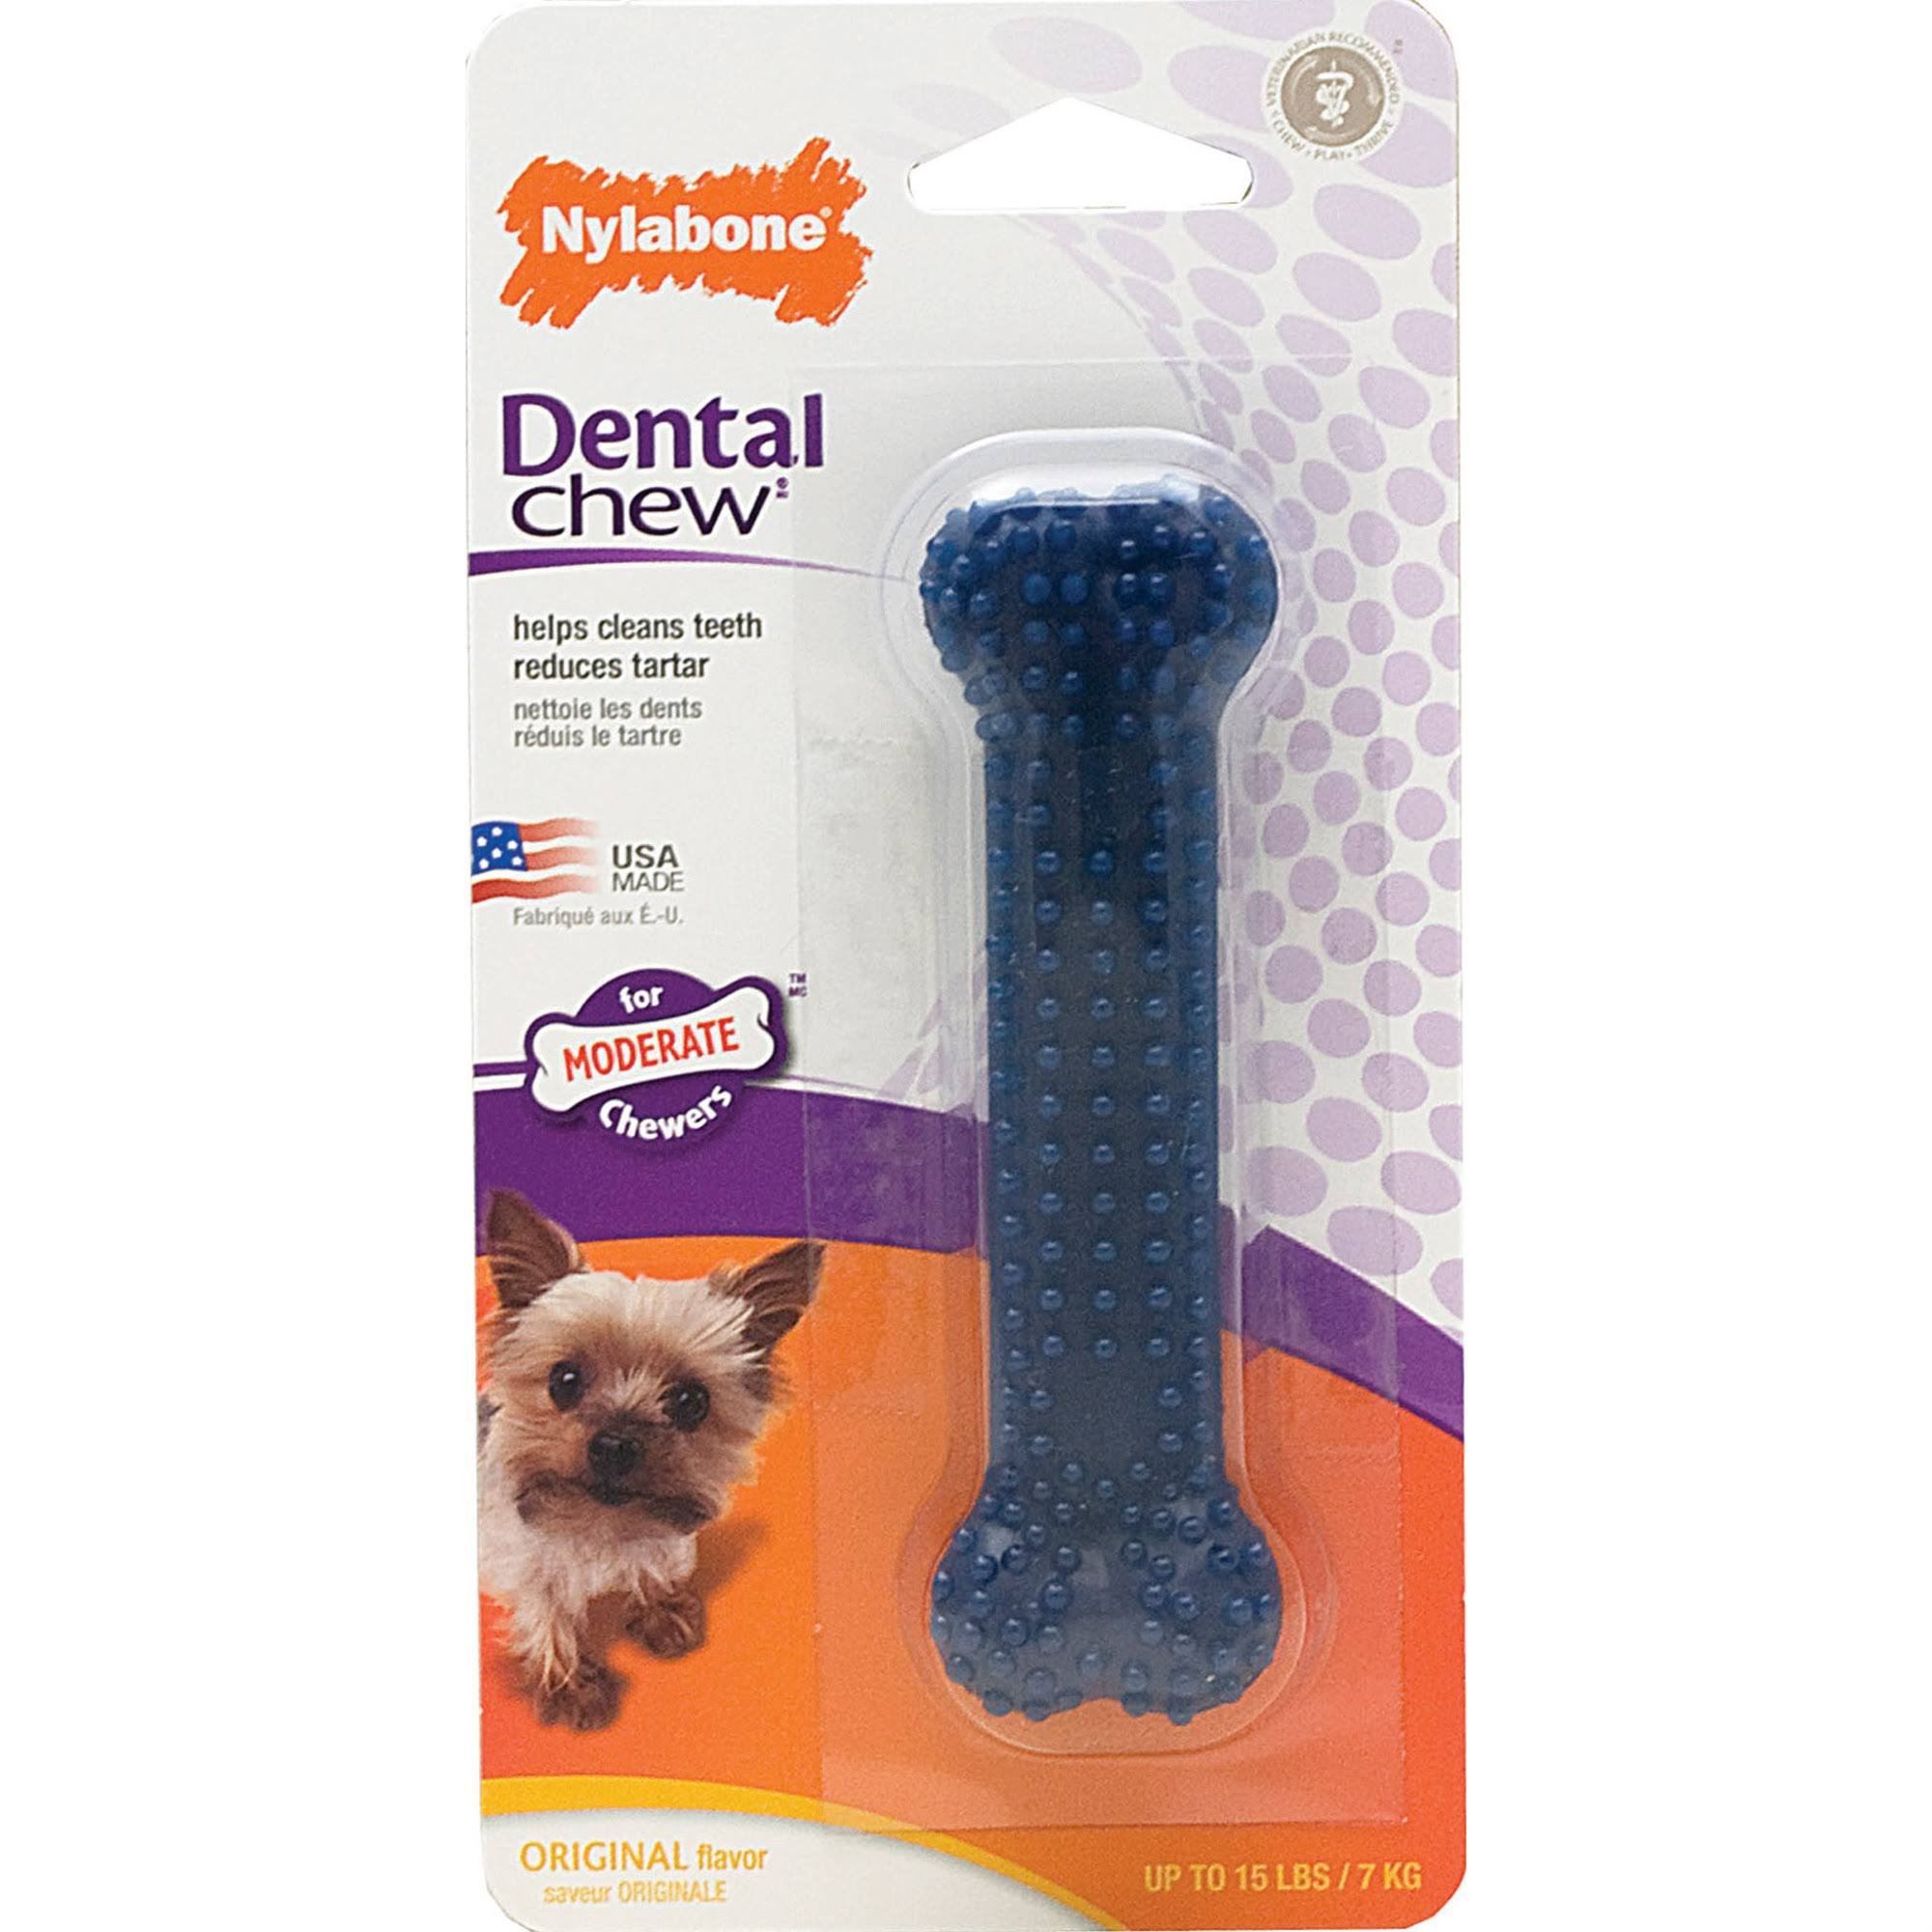 Nylabone Dental Dog Chew Toy - Petit, Original Flavored Bone